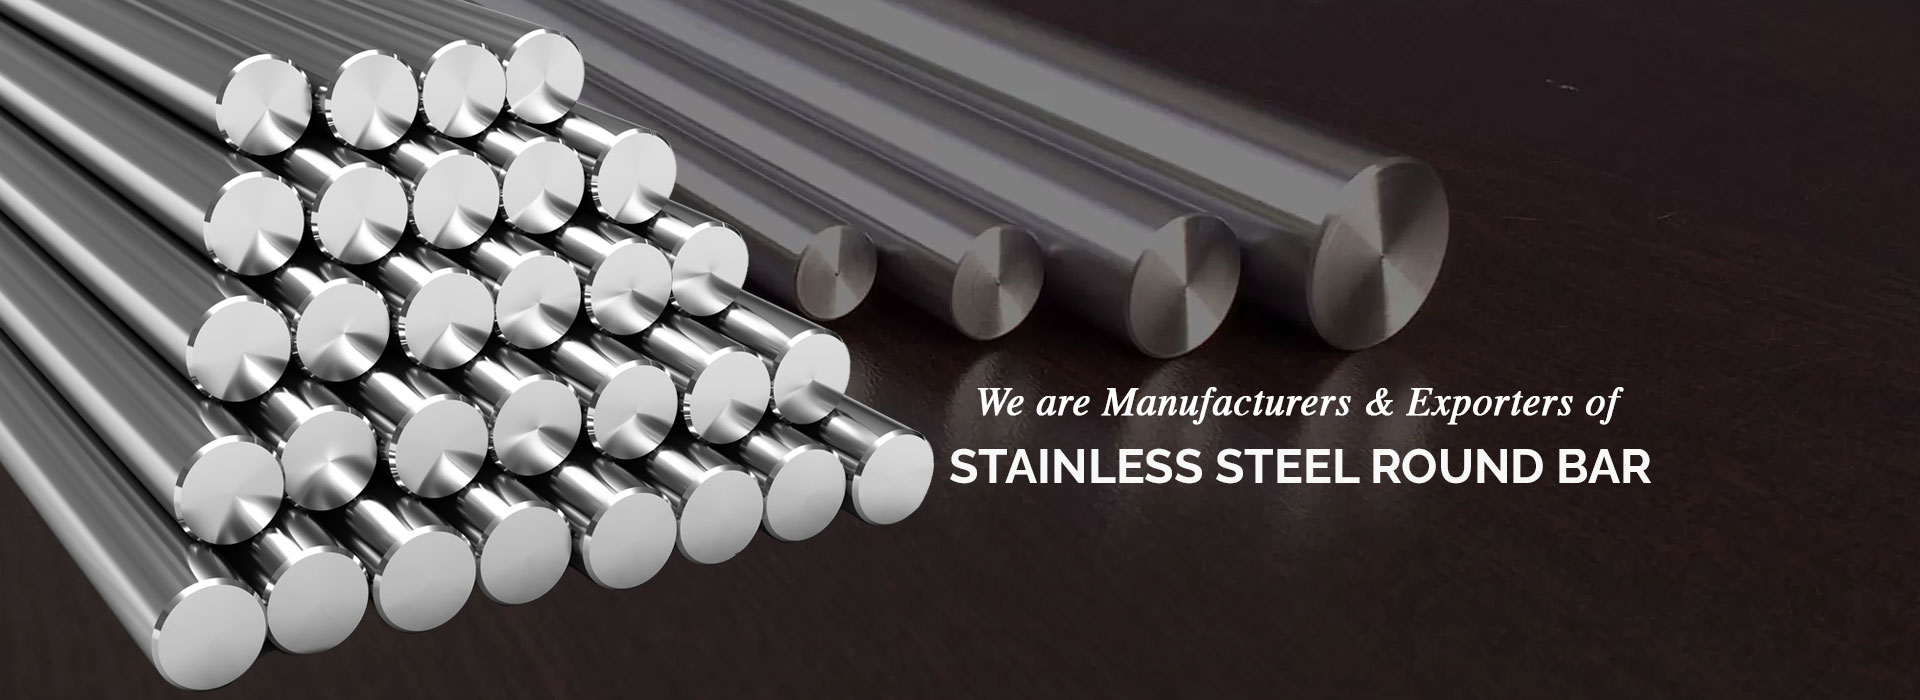 Stainless Steel Round Bar Manufacturers in Saudi Arabia